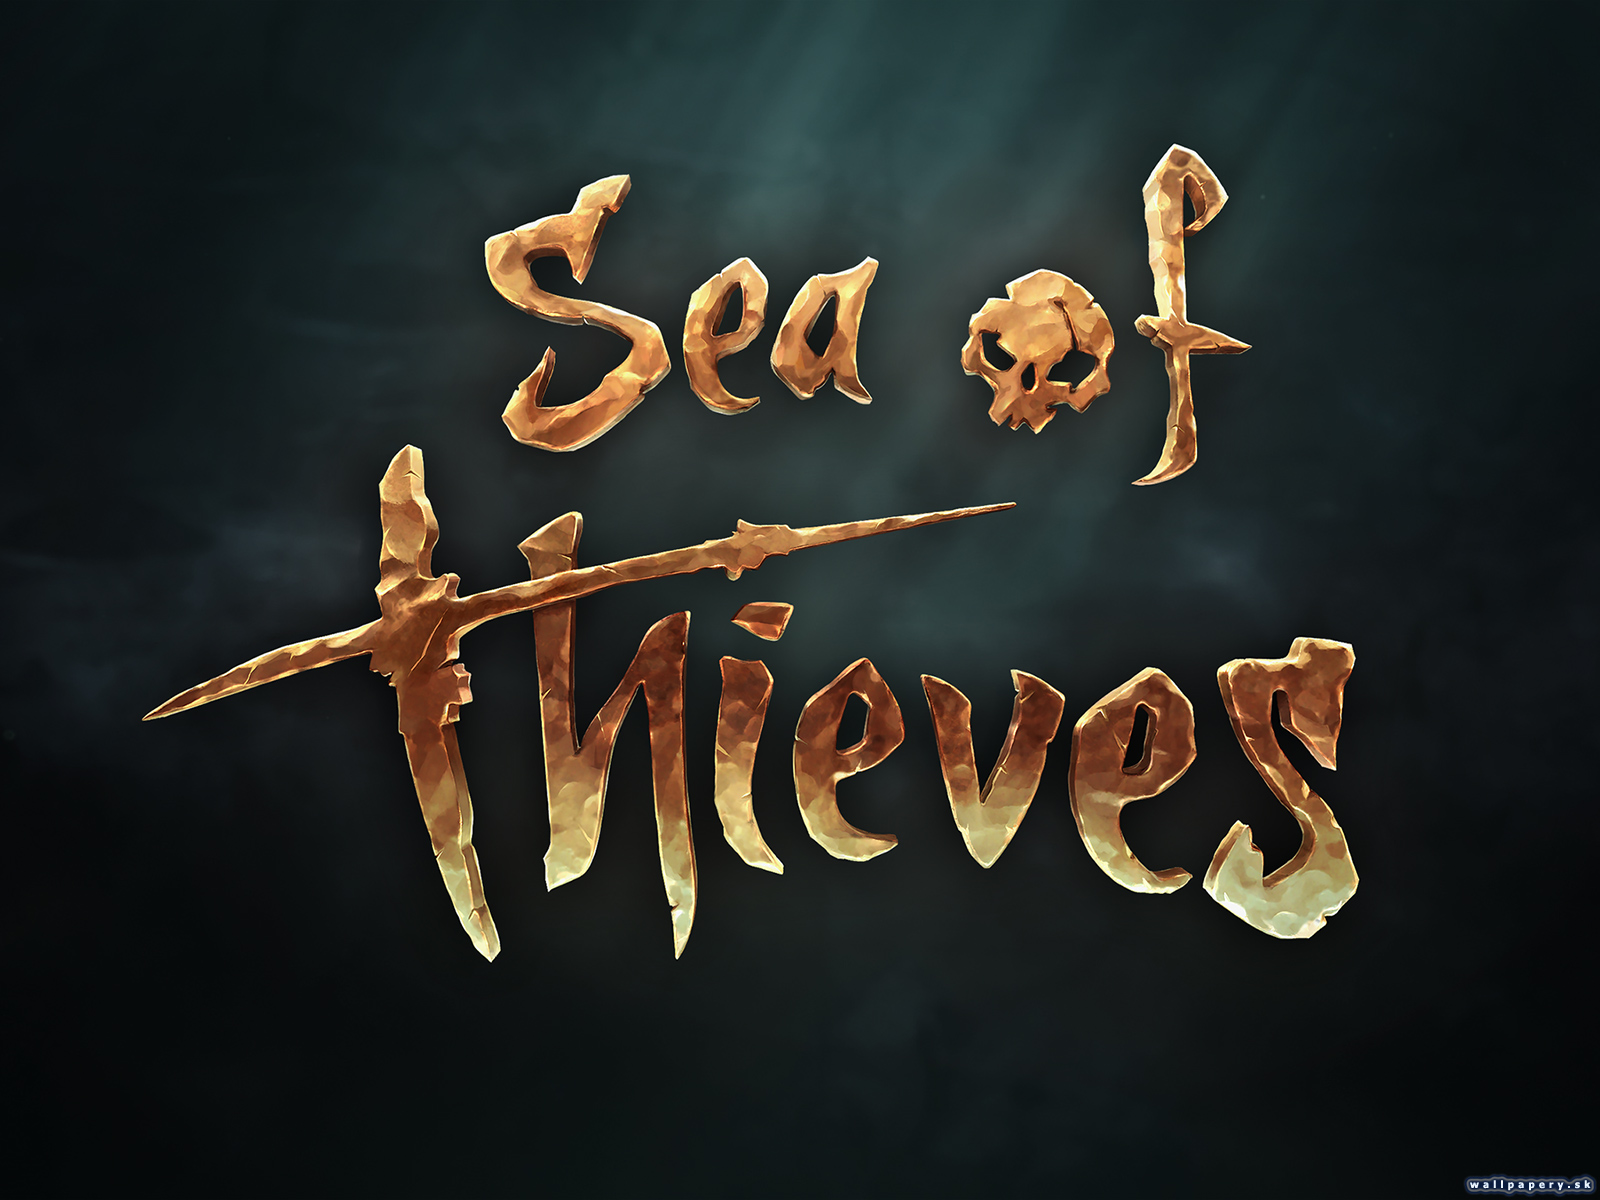 Sea of Thieves - wallpaper 5